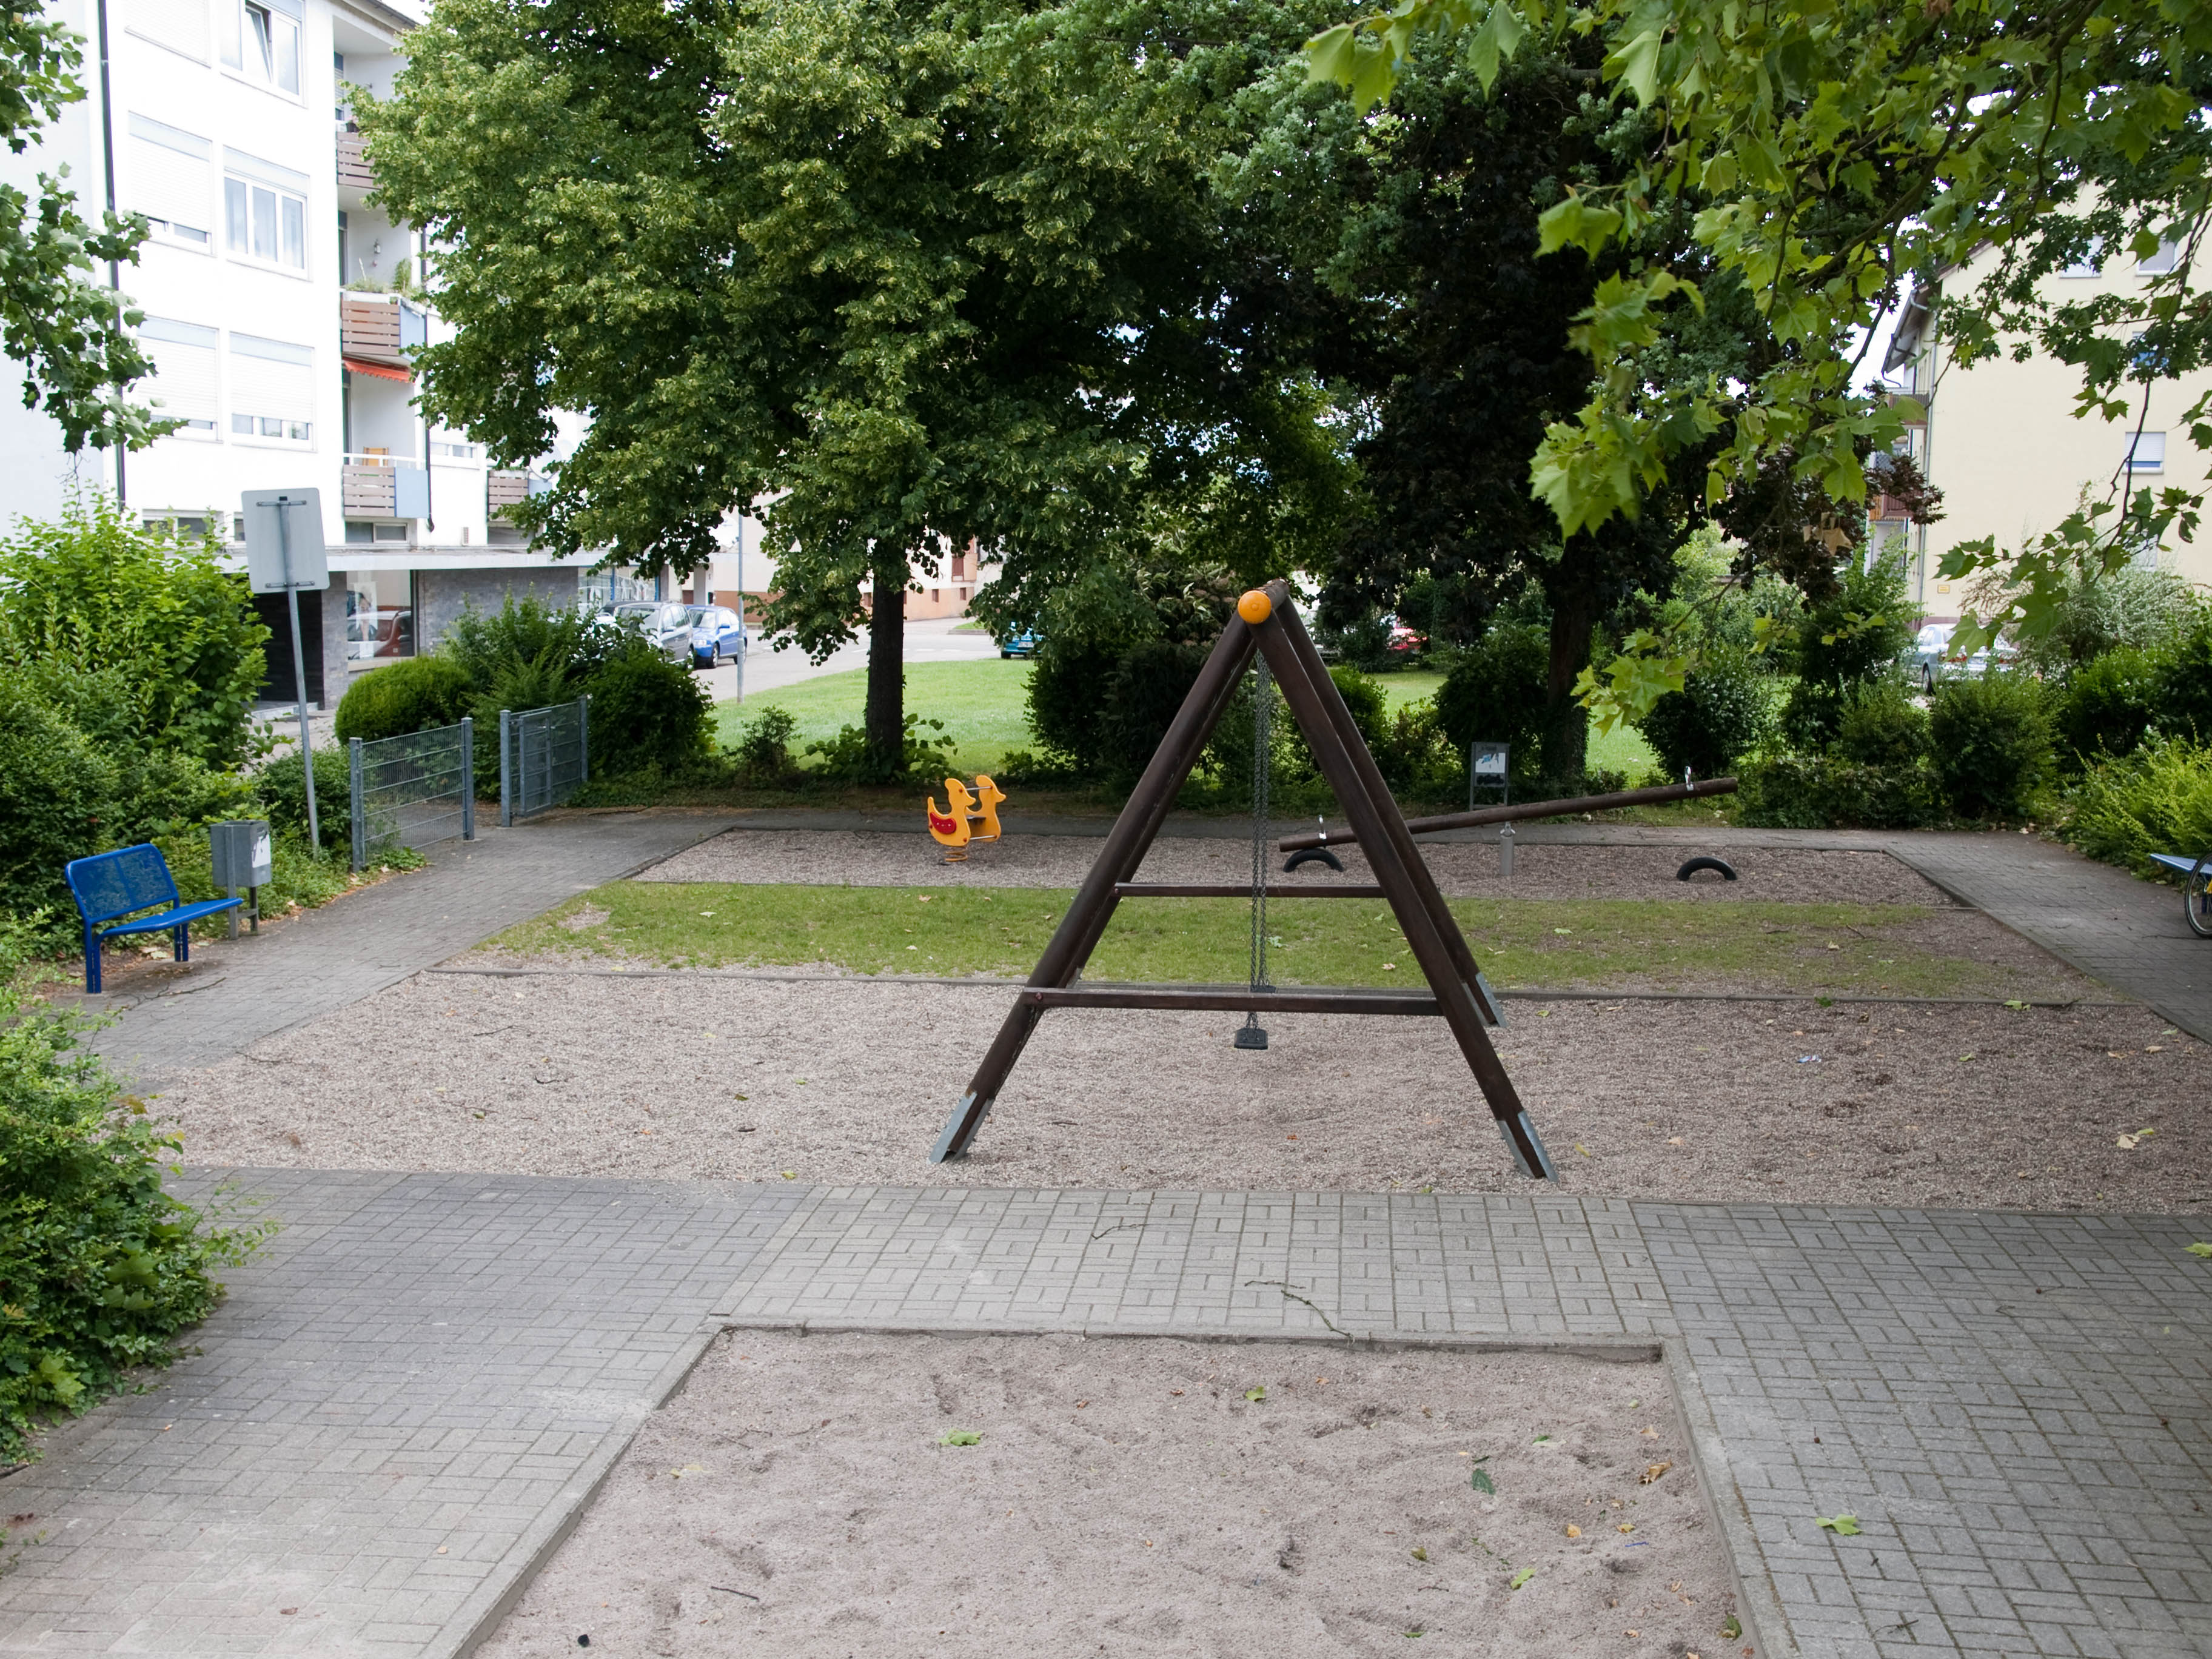 Datei:Spielplatz Berliner Platz Schwetzingen-2.jpg